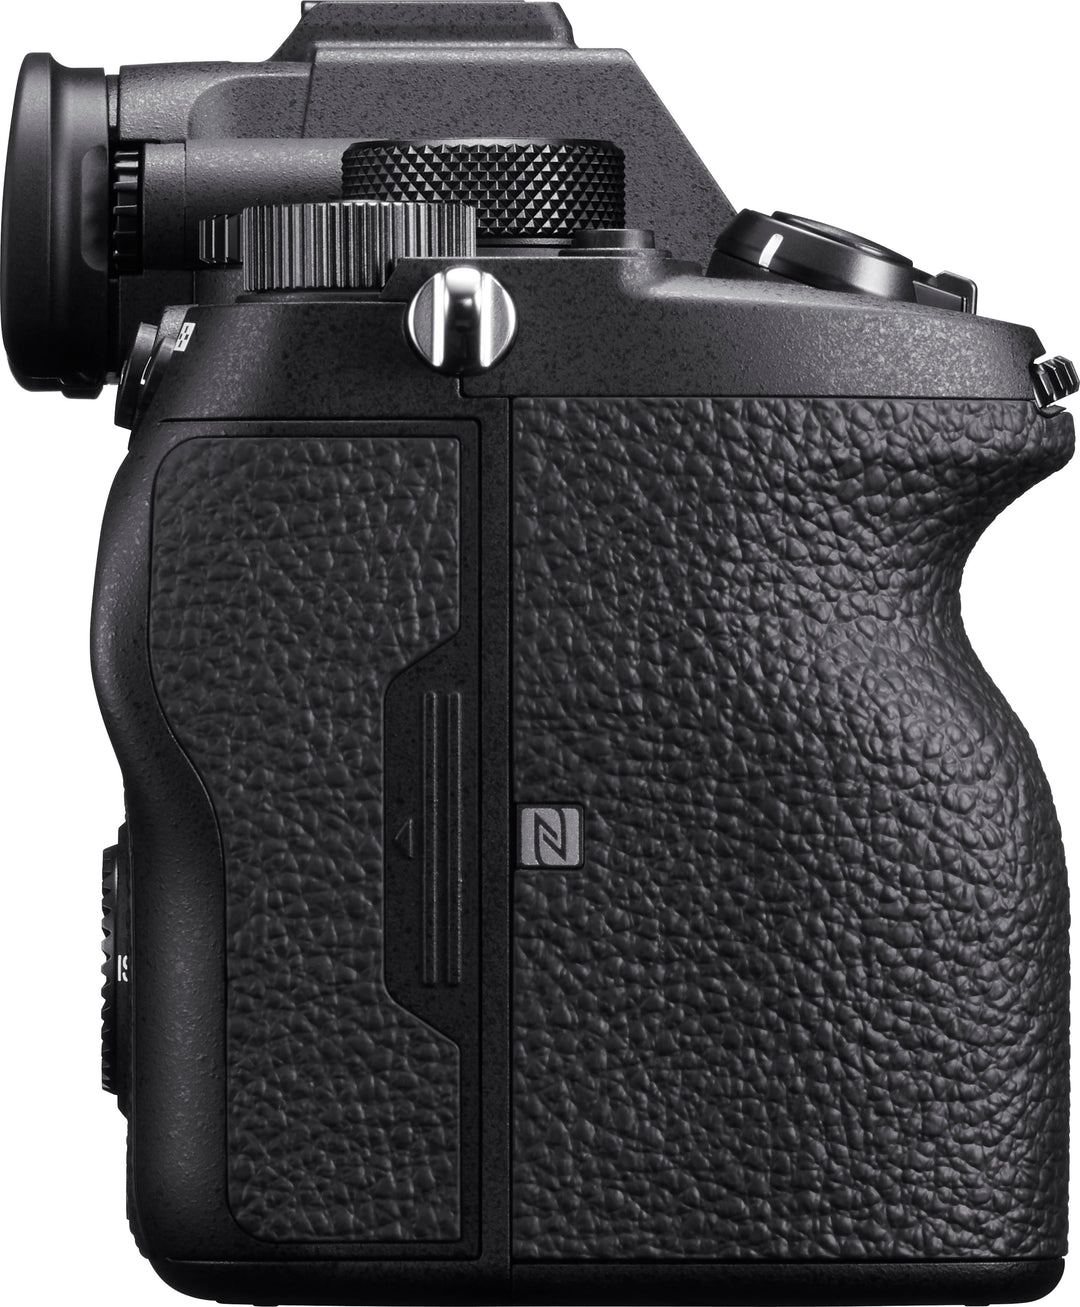 Sony - Alpha 7R IV Full-frame Mirrorless Interchangeable Lens 61 MP Camera - Body Only - Black_3